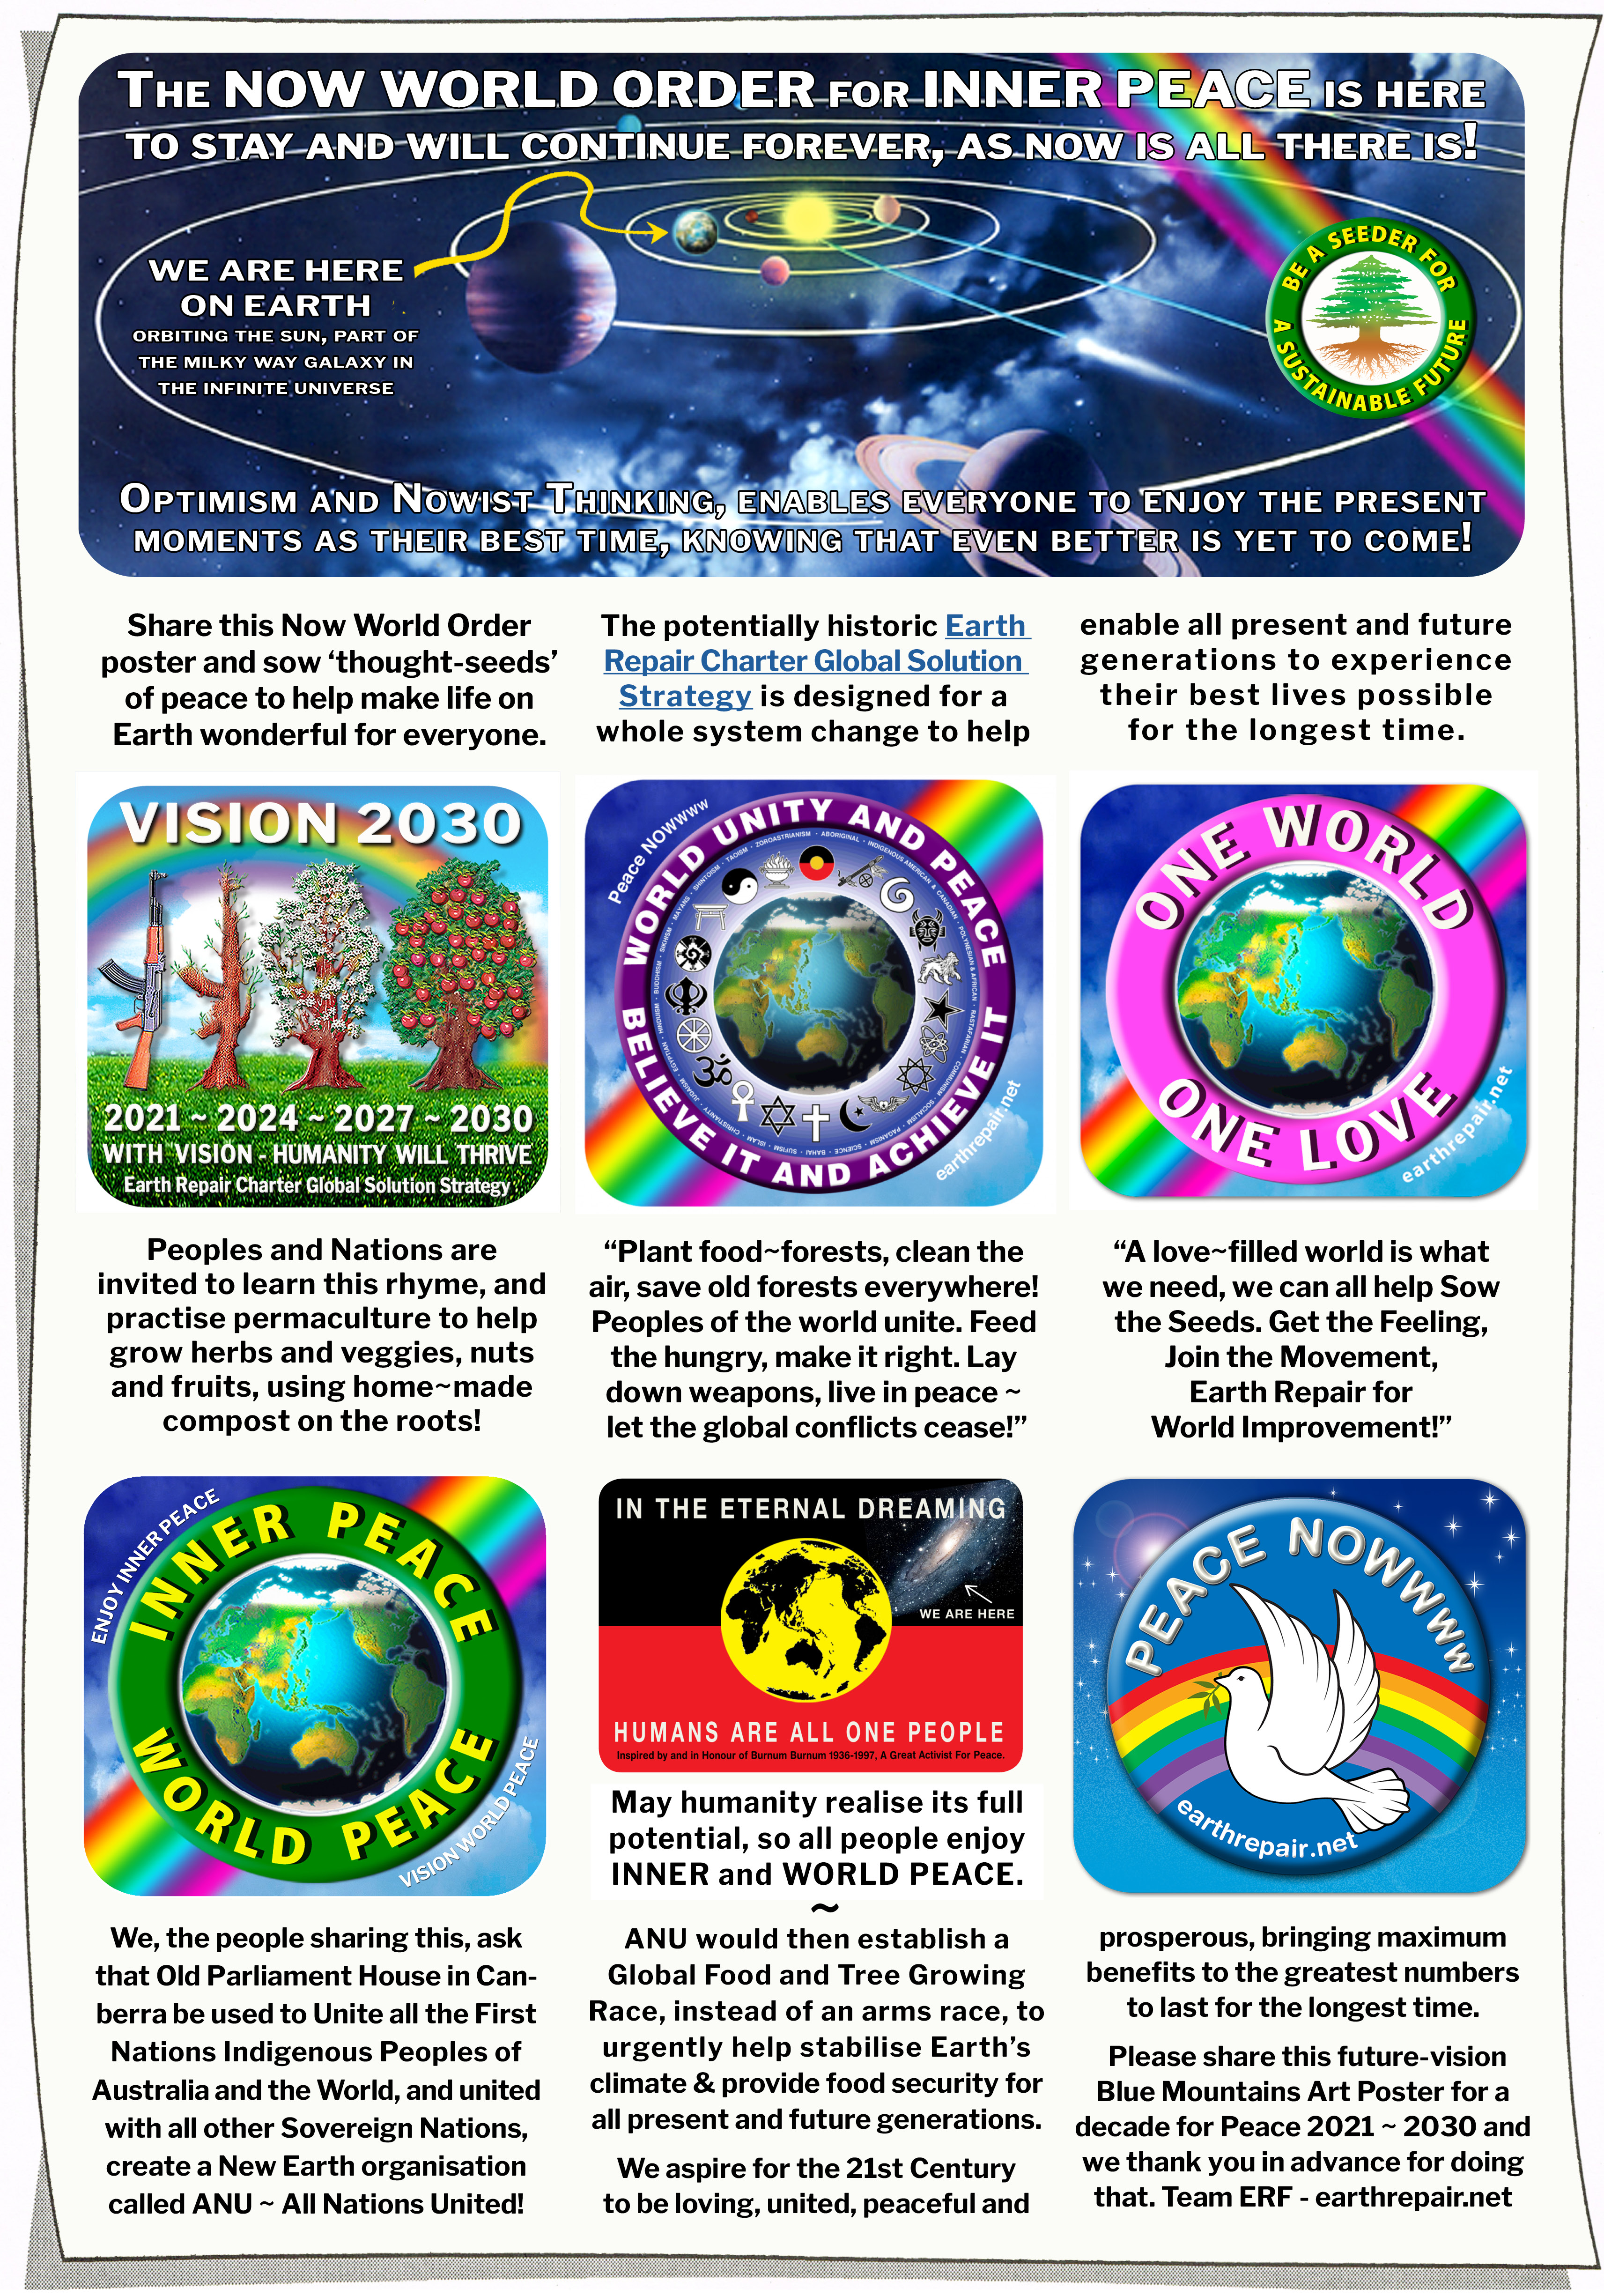 The Now World Order Poster for Inner Peace